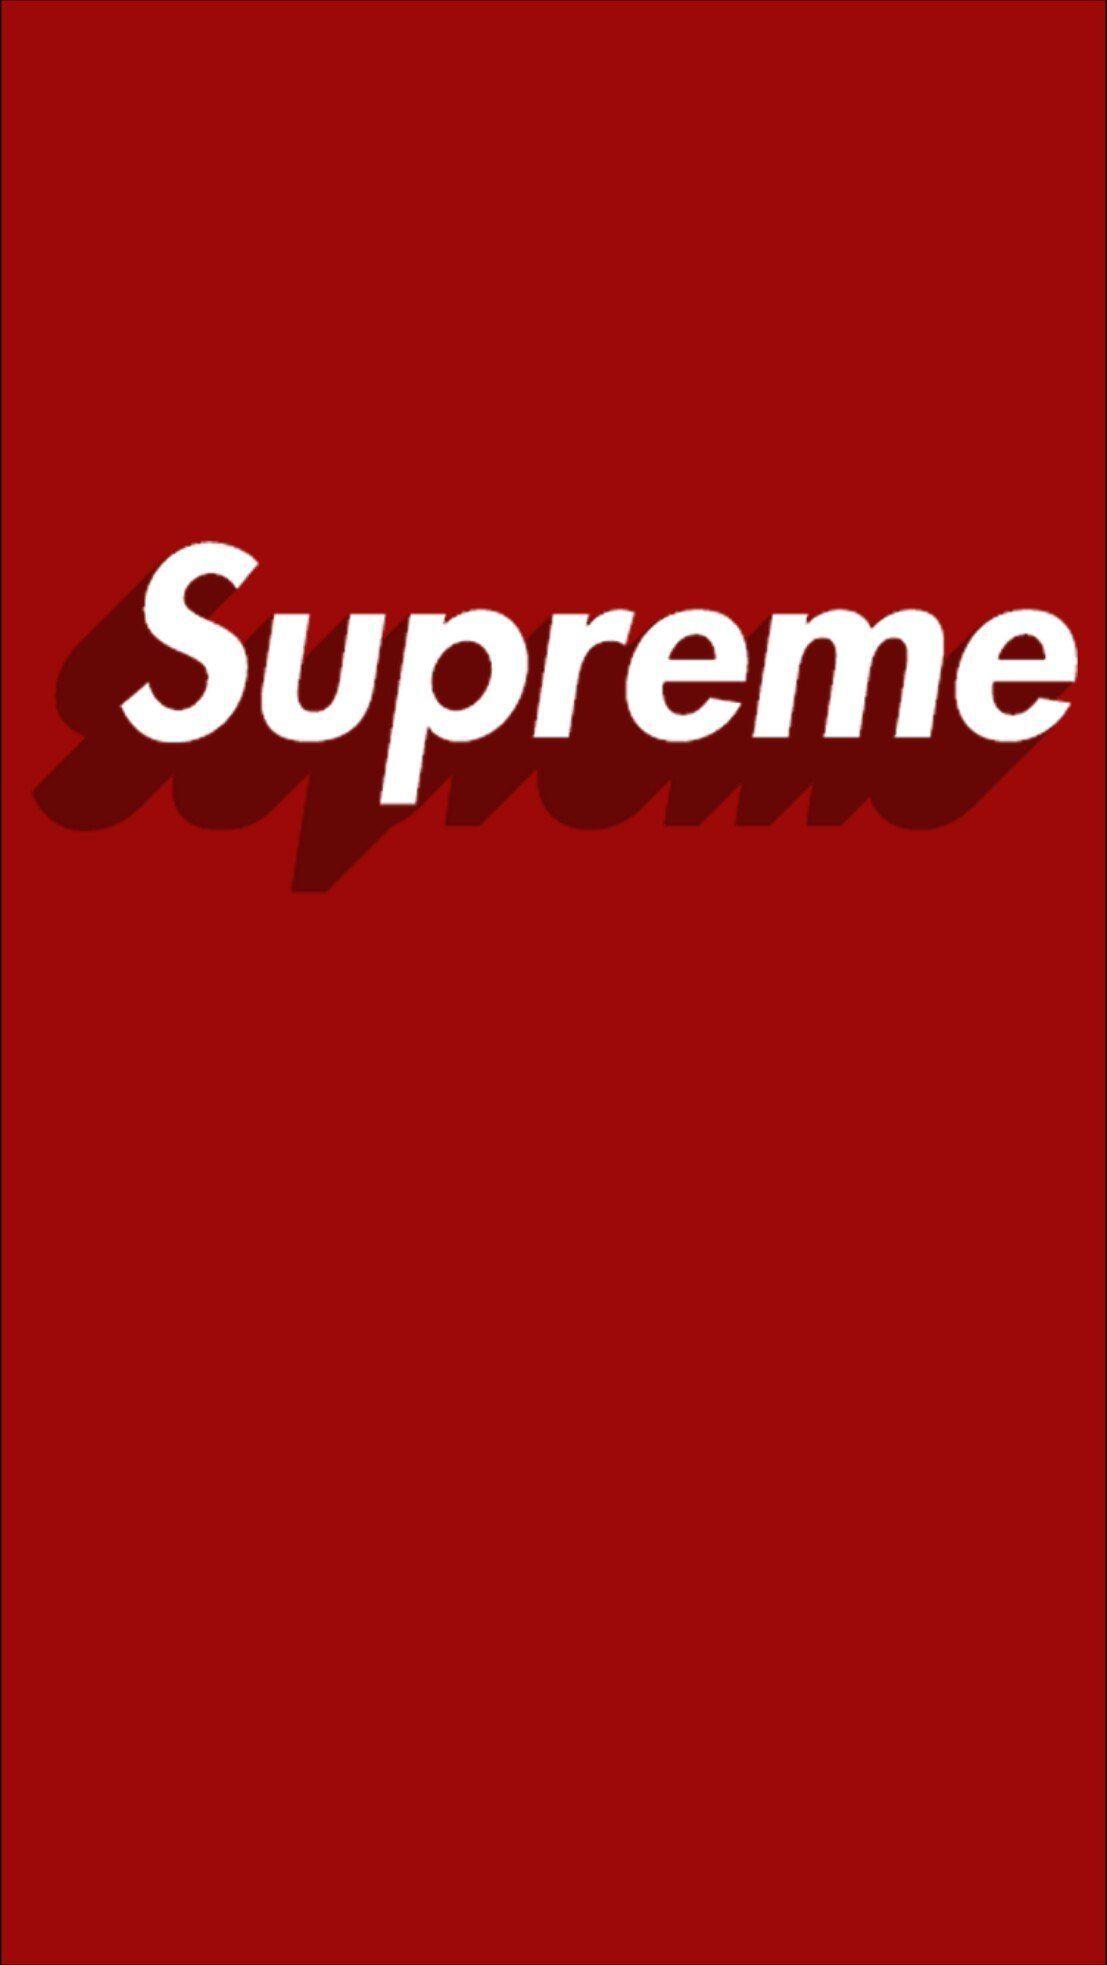  Supreme  Nike Wallpapers  Top  Free Supreme  Nike 